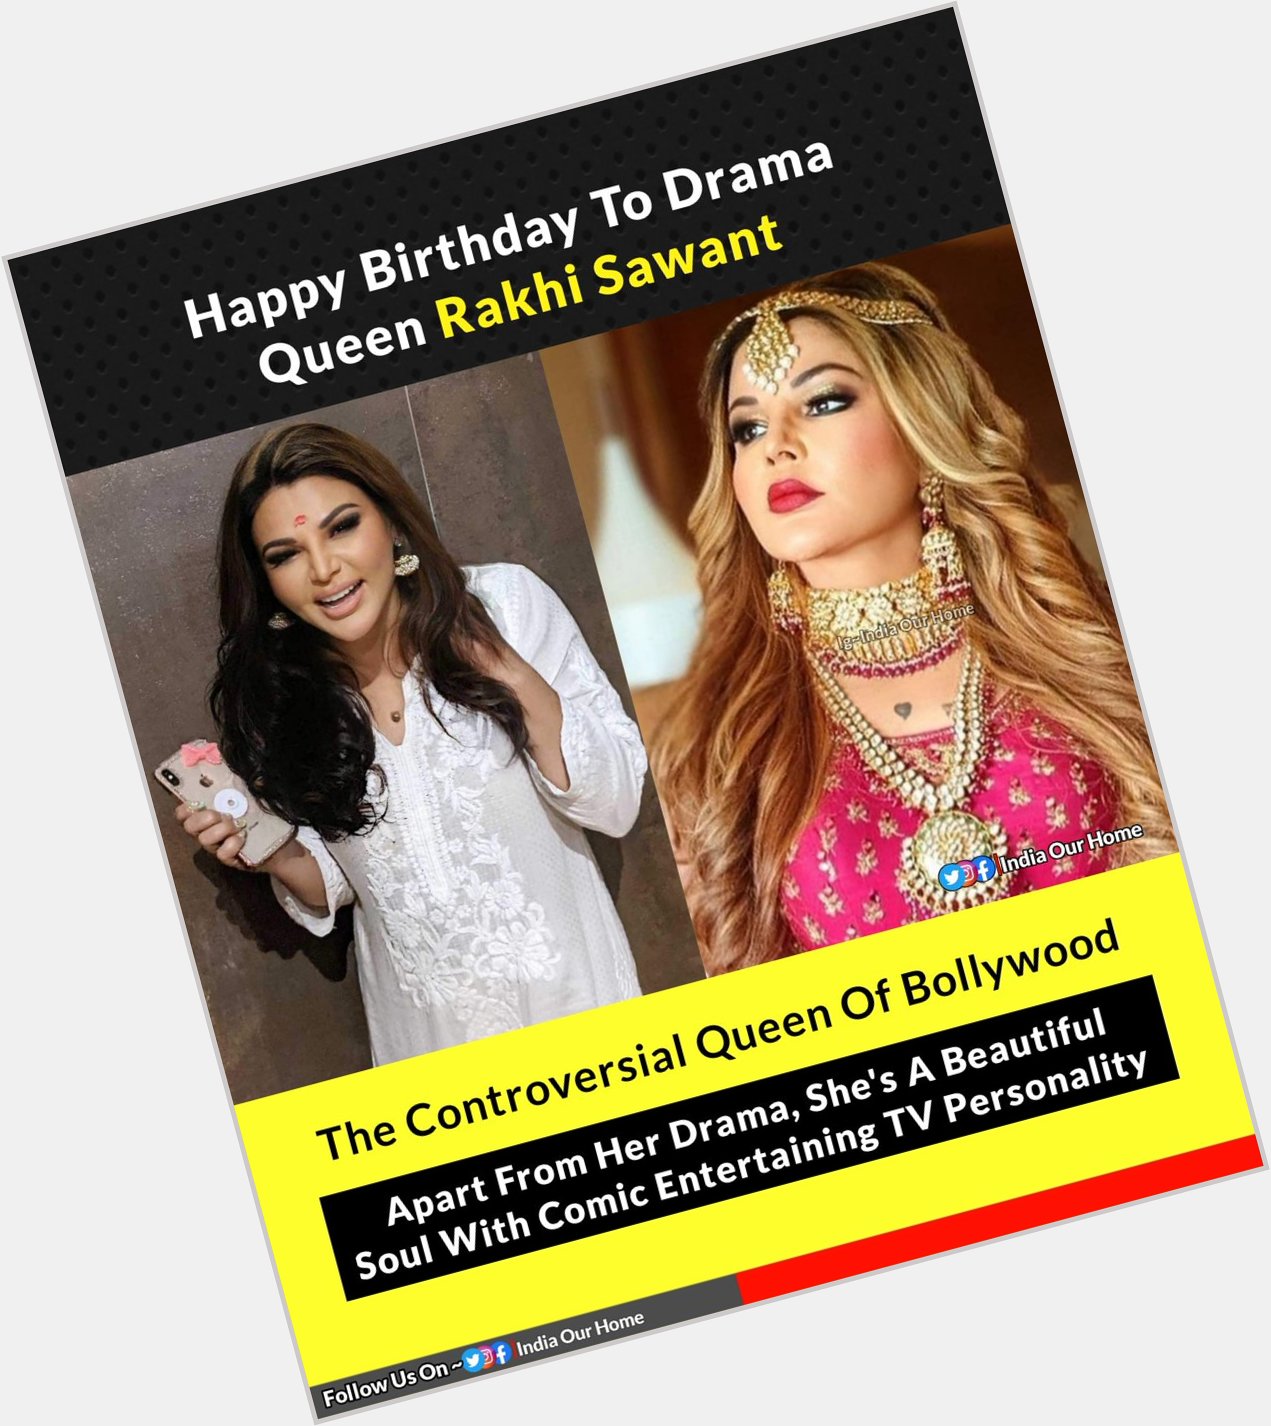 Happy Birthday To Drama Queen Rakhi Sawant       